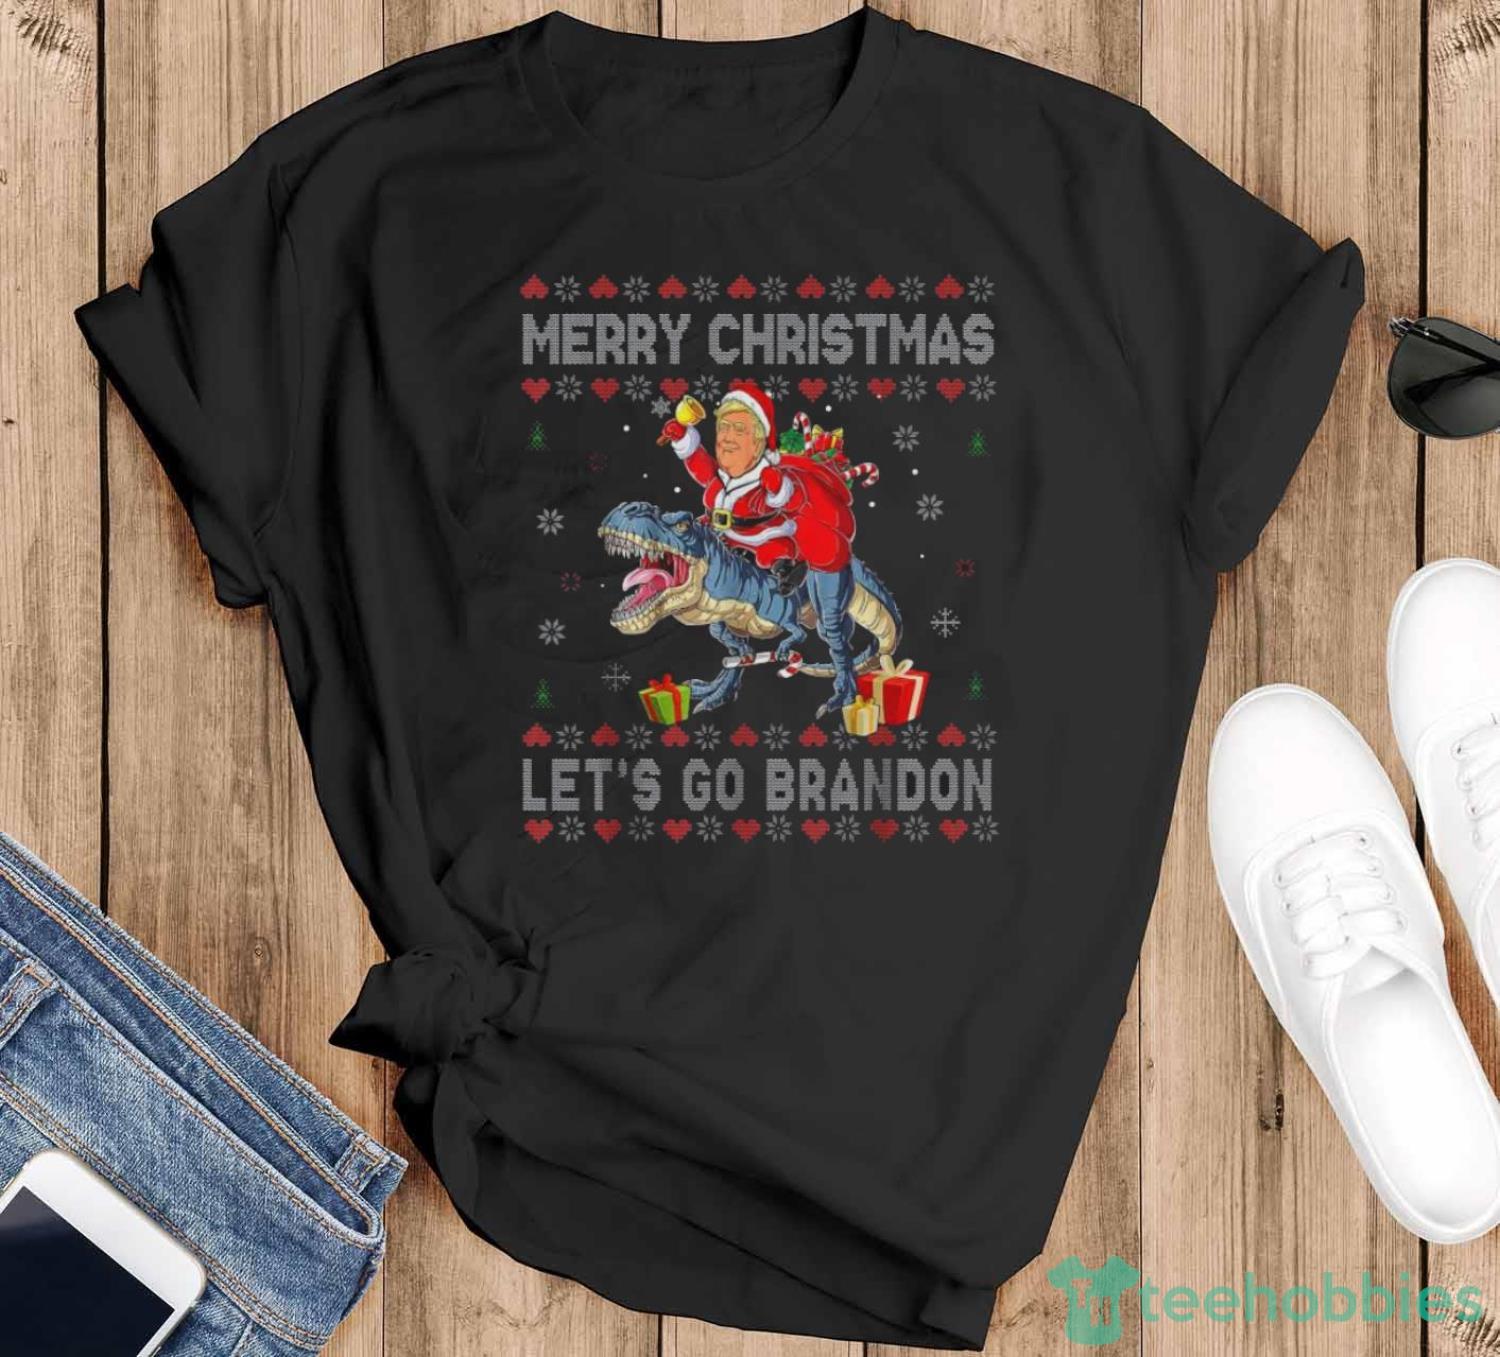 Santa Donald Trump riding Dinosaurs let’s go brandon Ugly Merry Christmas sweater - Black T-Shirt